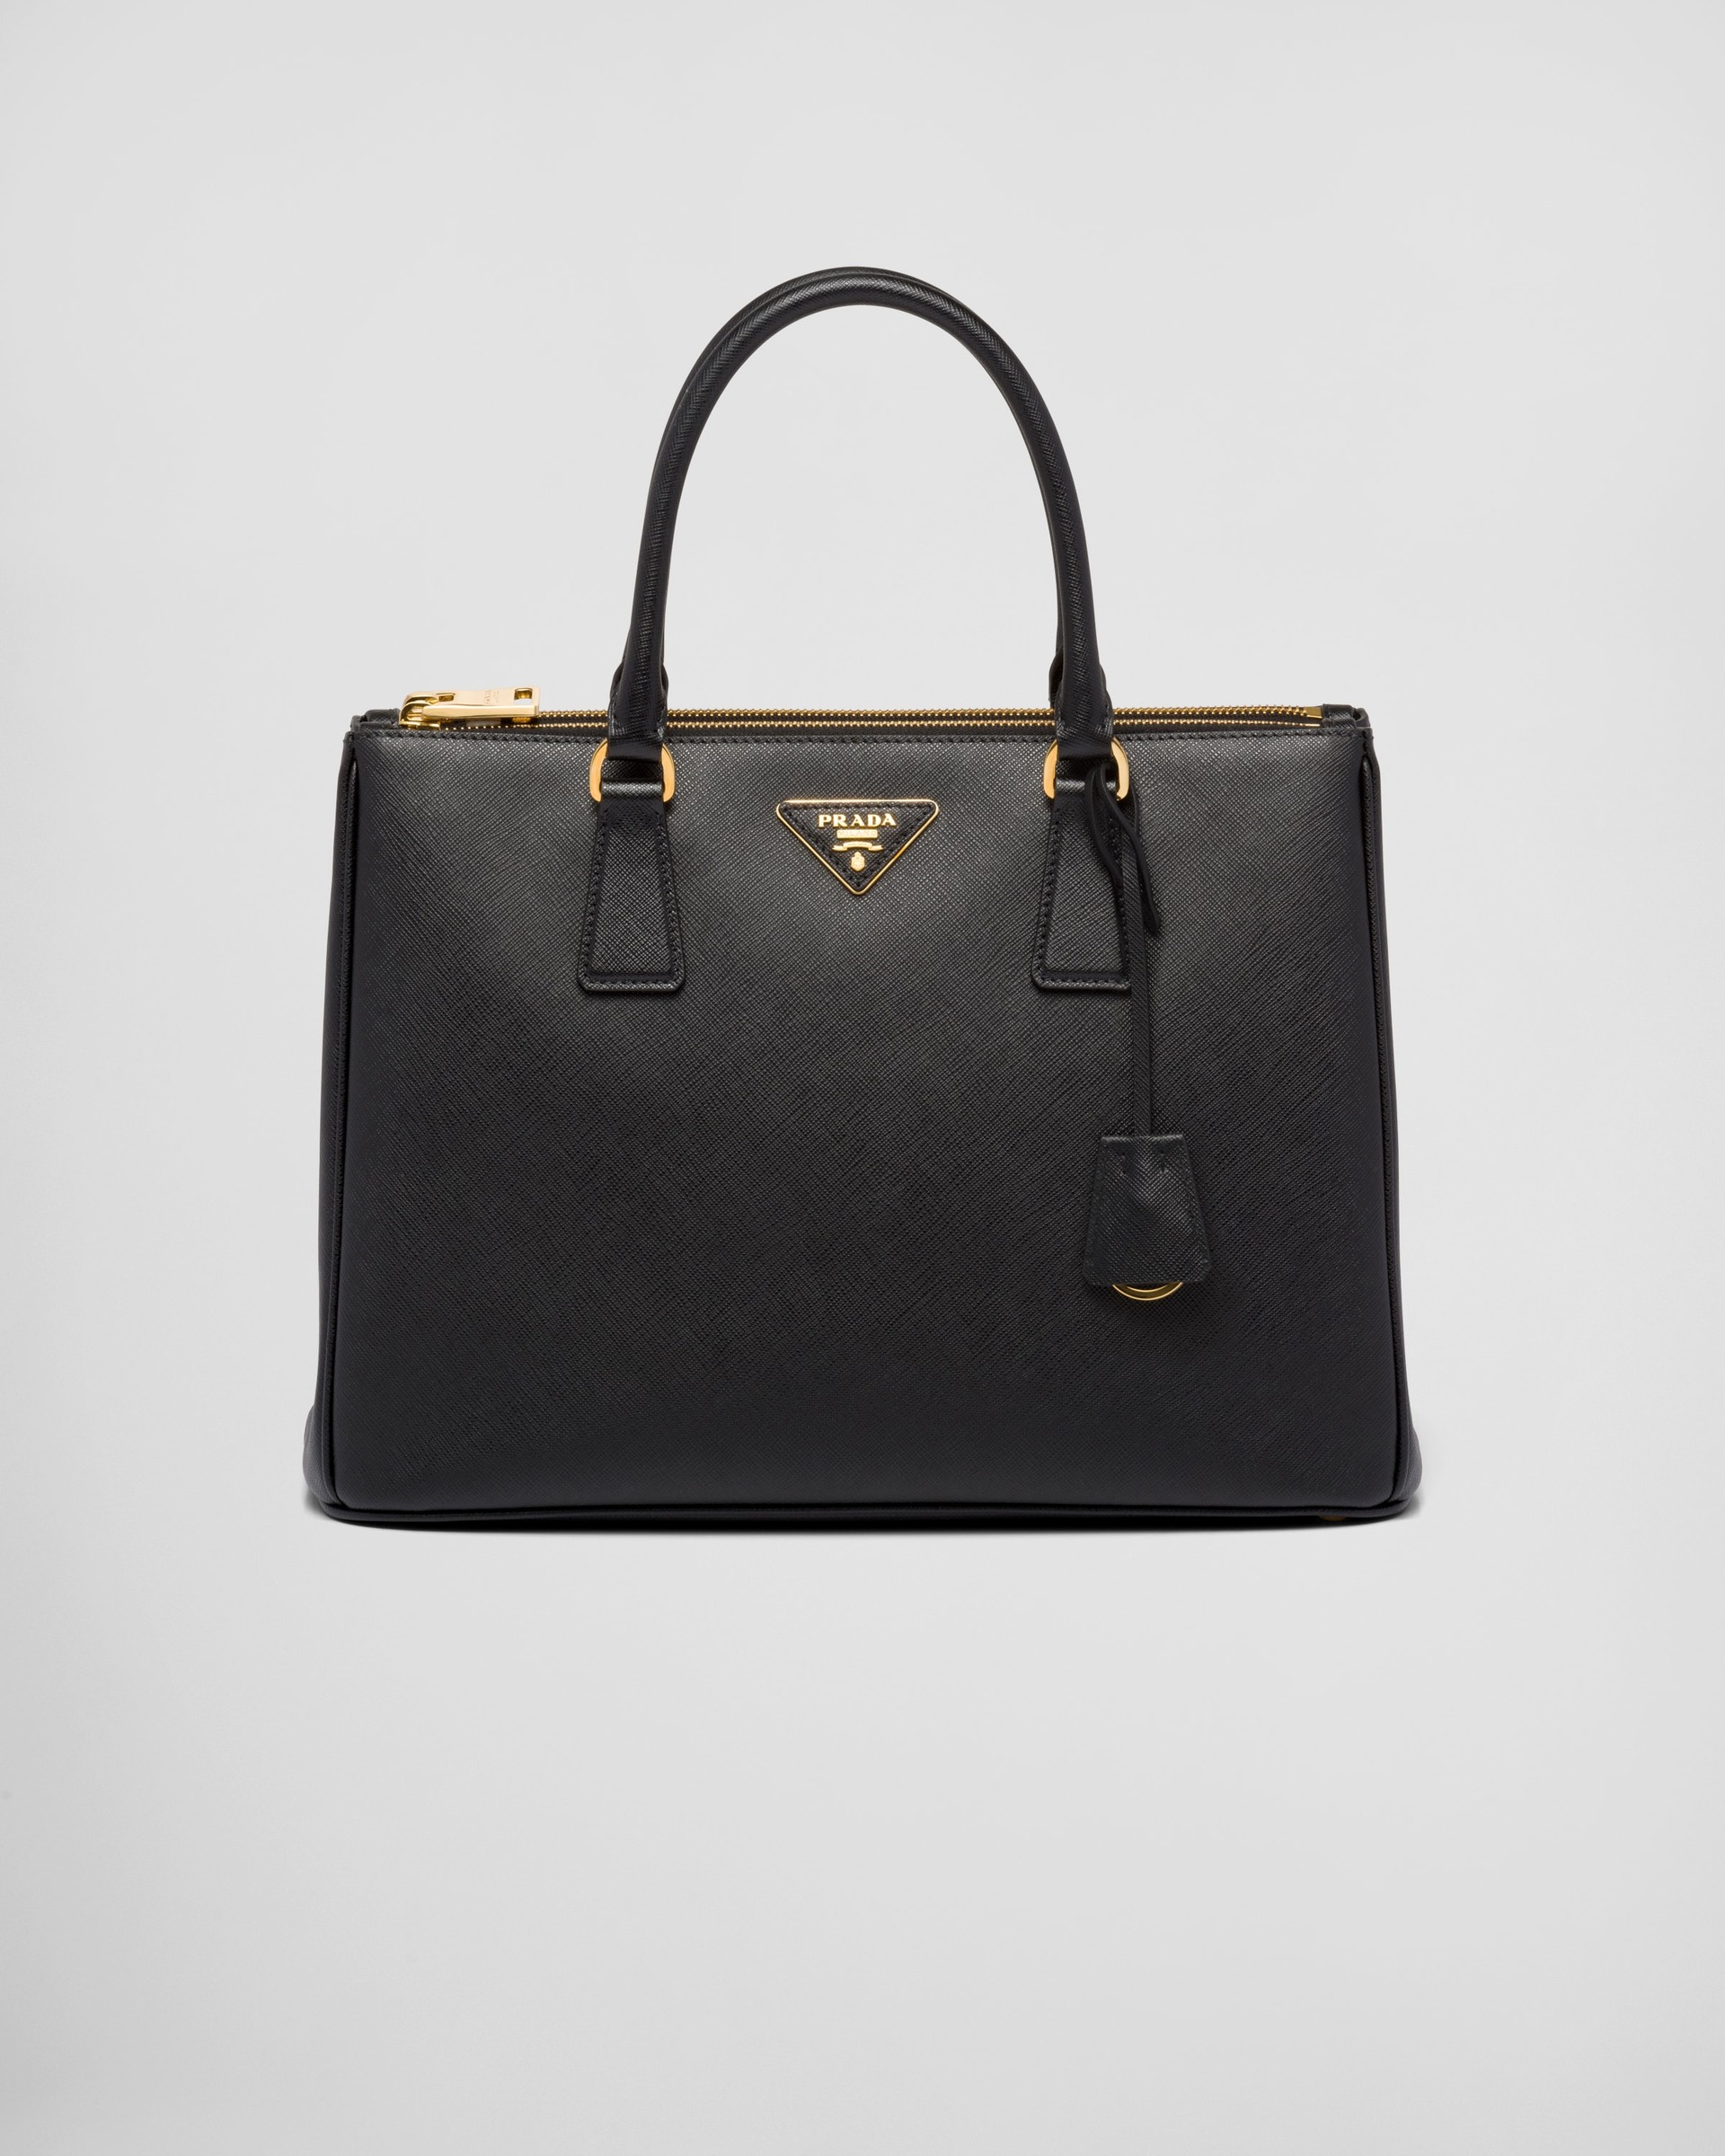 Prada - Galleria Saffiano Leather Large Bag - Black